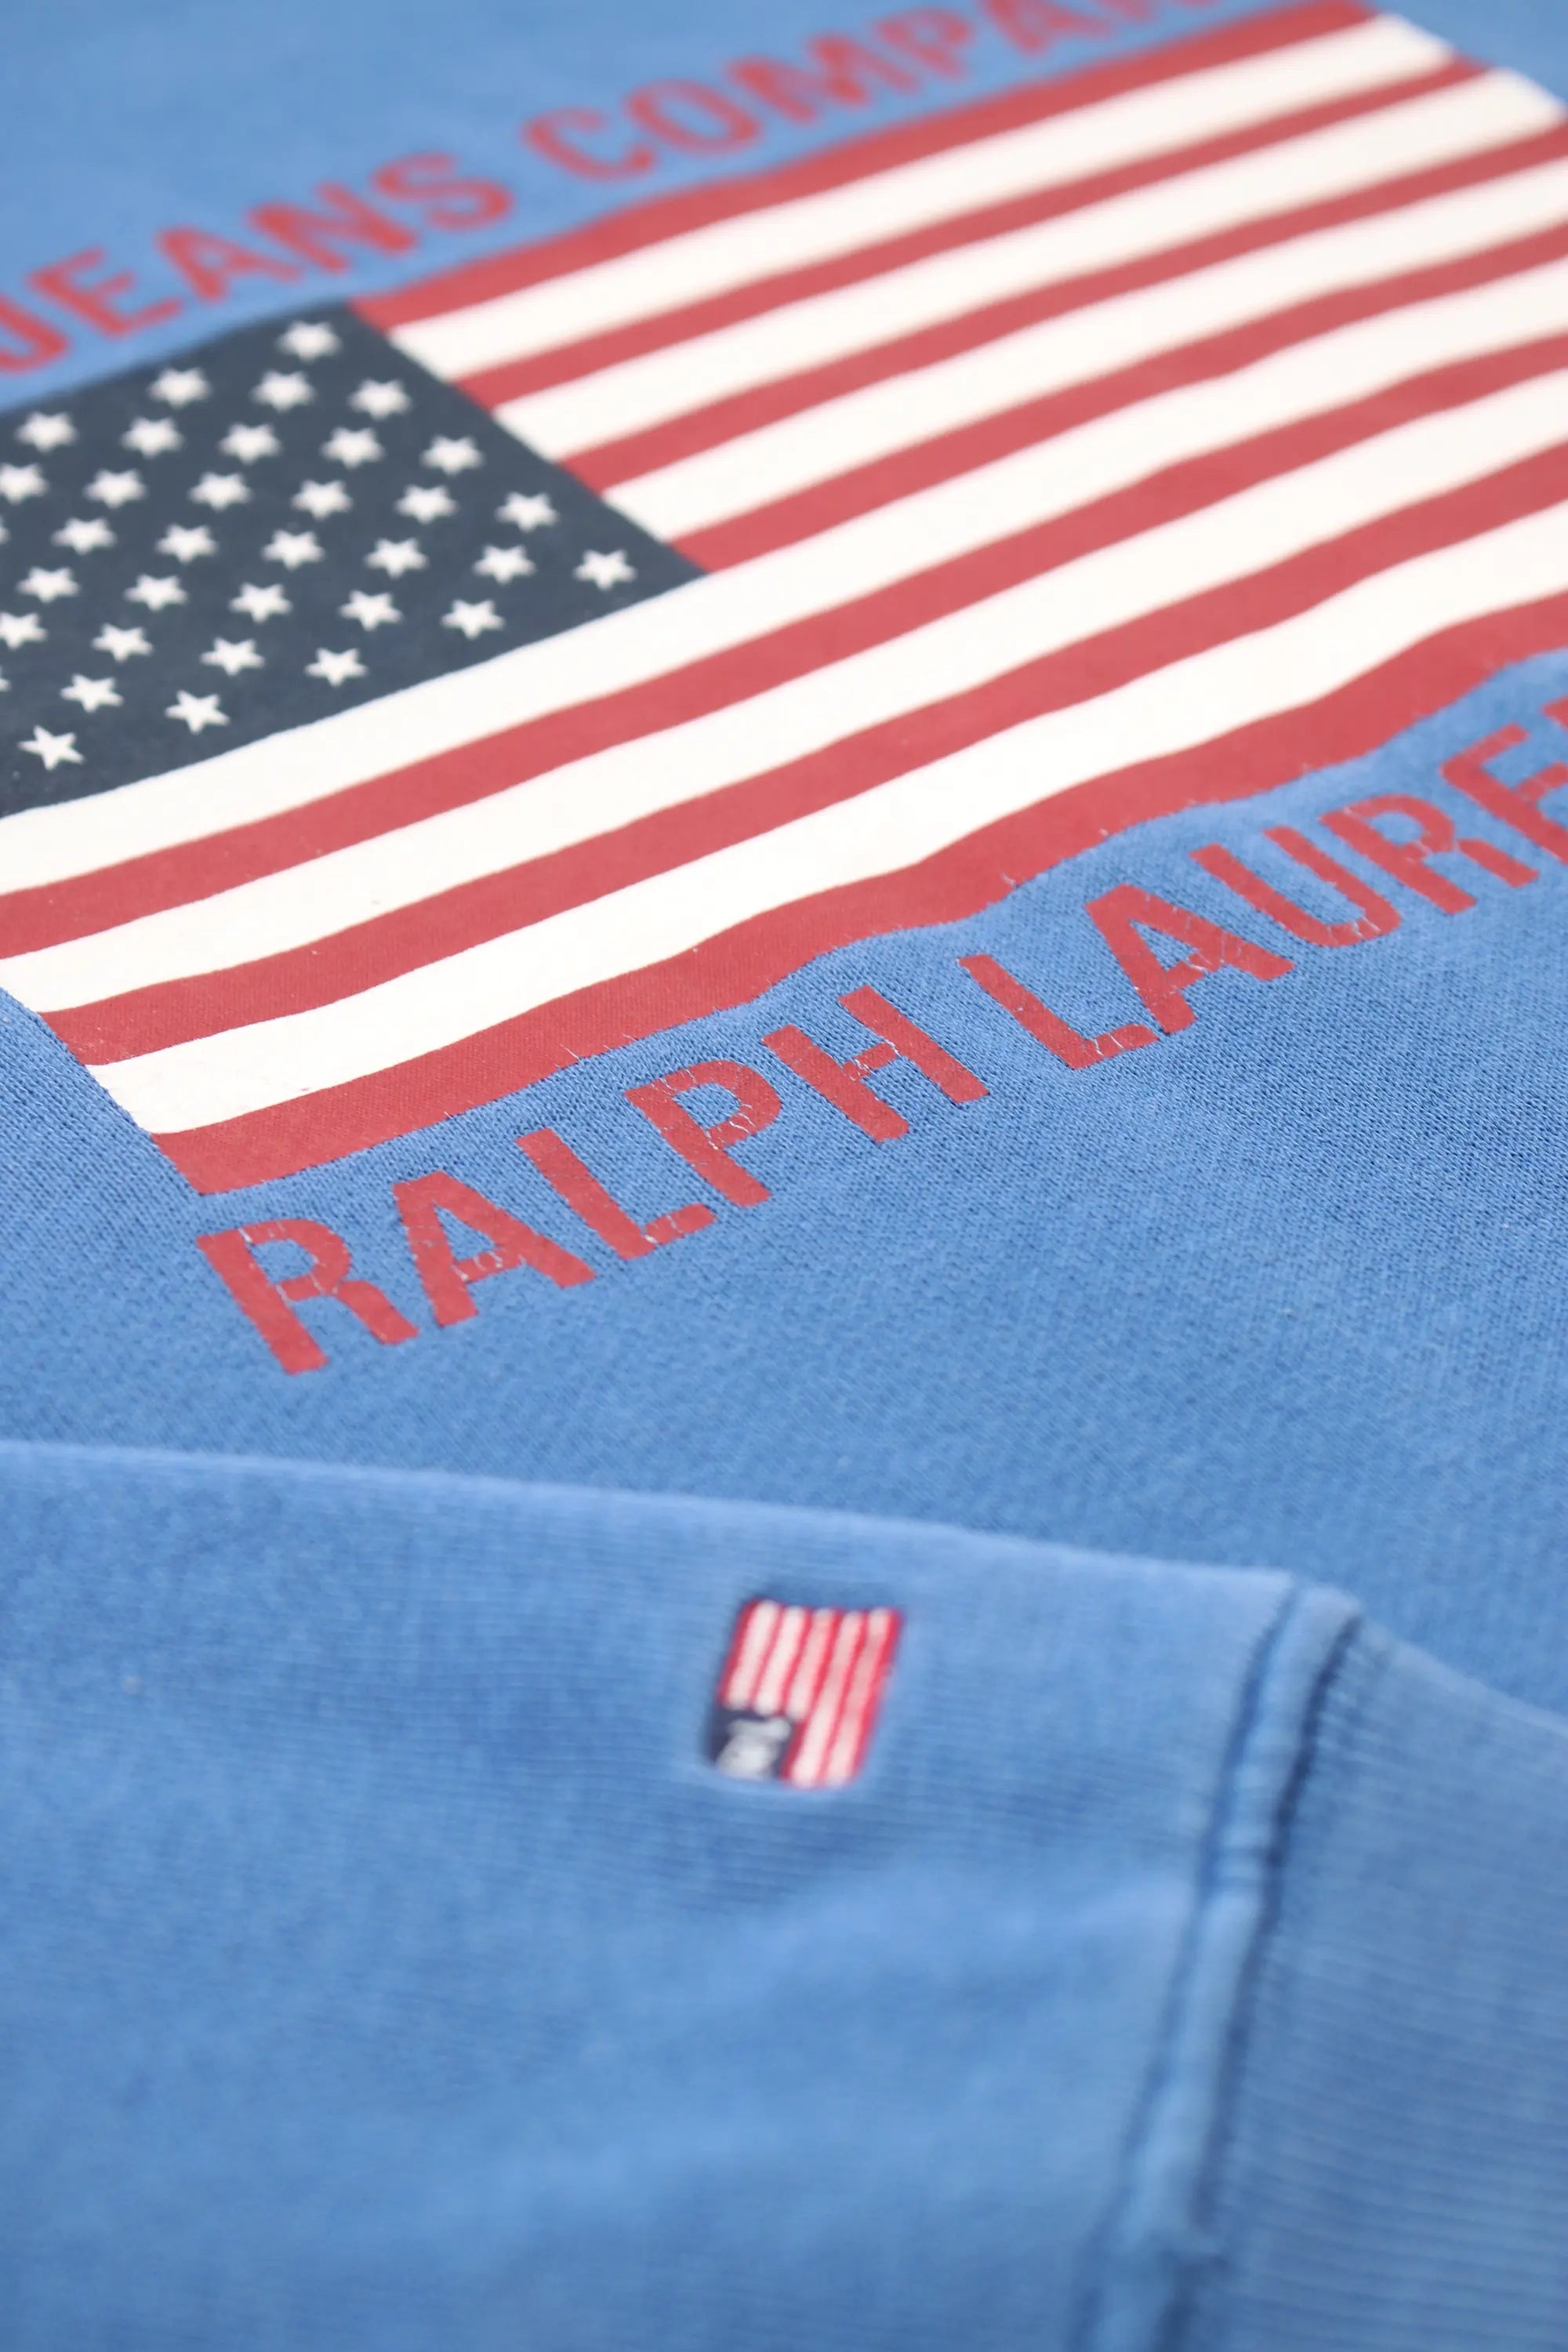 Ralph Lauren US Flag Sweater